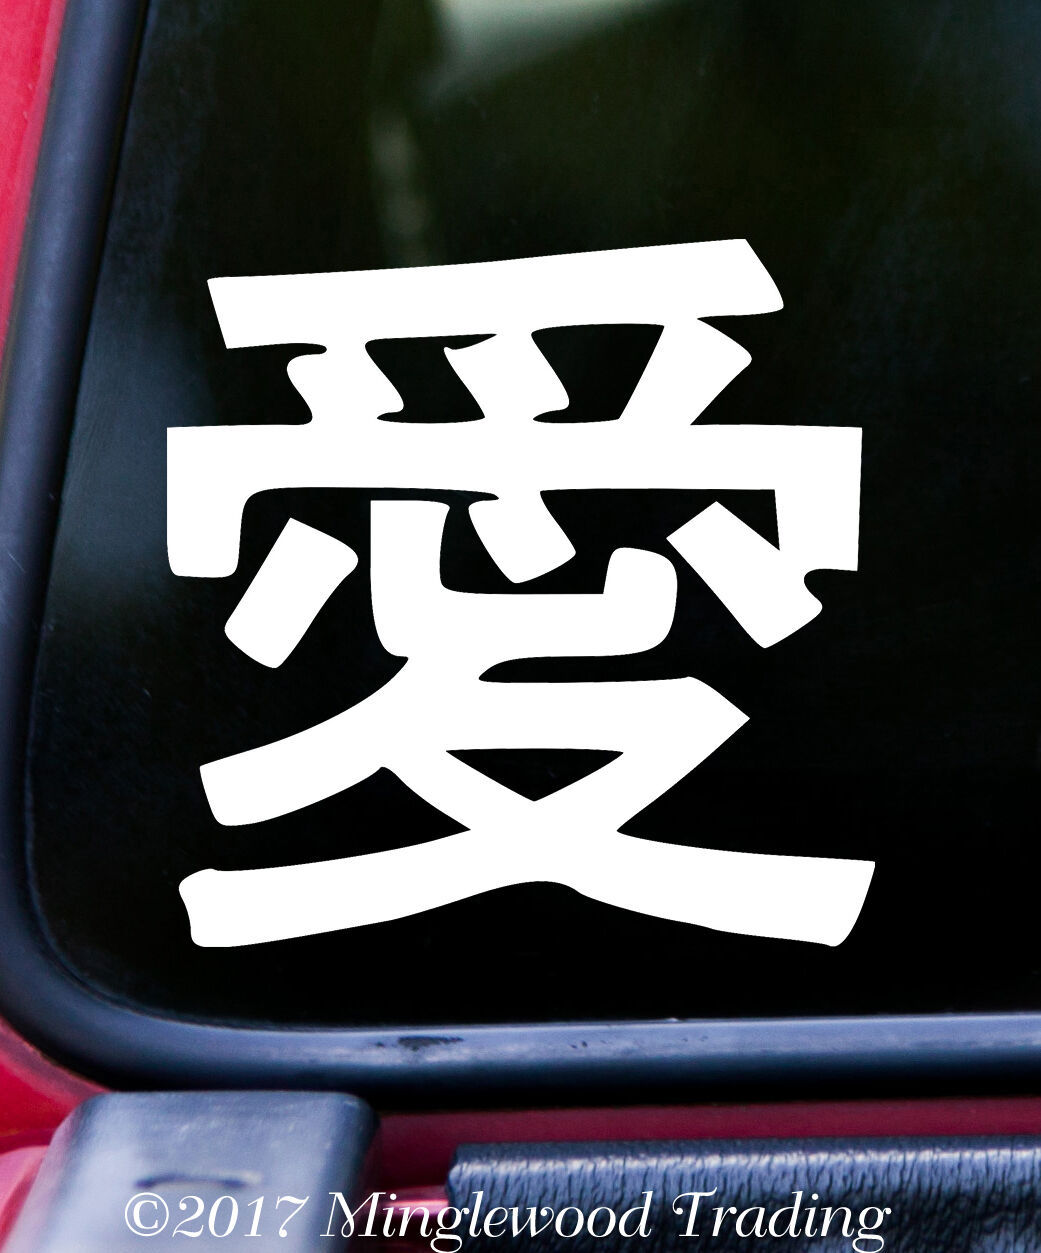 LOVE KANJI - Vinyl Sticker - Japanese Chinese Character Ai - Die Cut Decal - $4.94 - $7.42